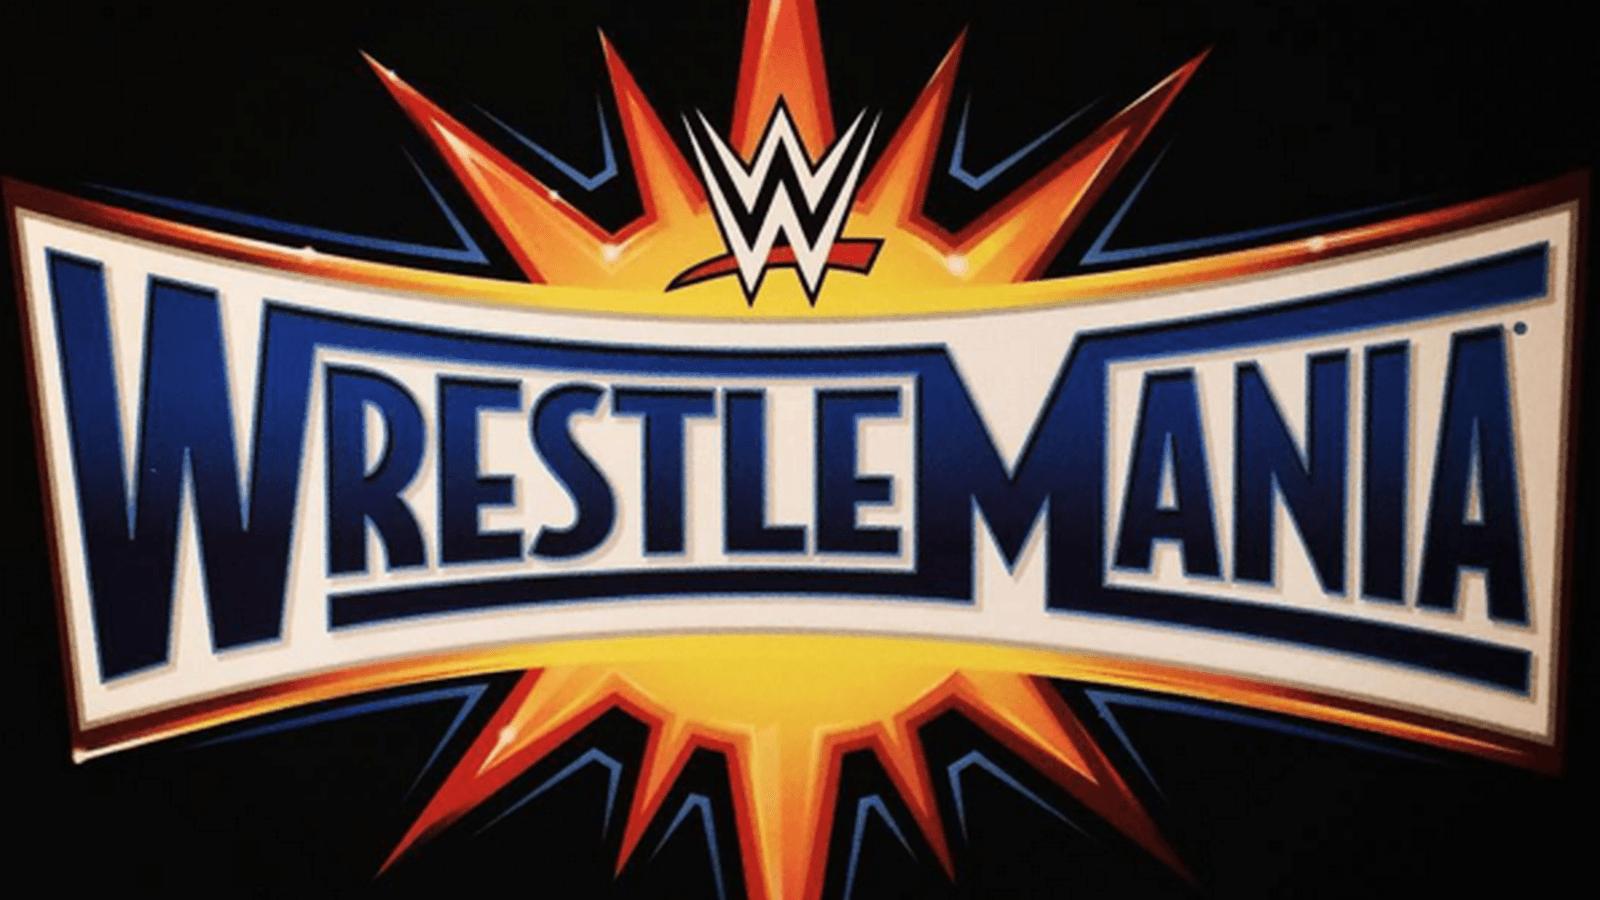 Here&;s The Official Logo For WrestleMania 33 Starburst In Orlando